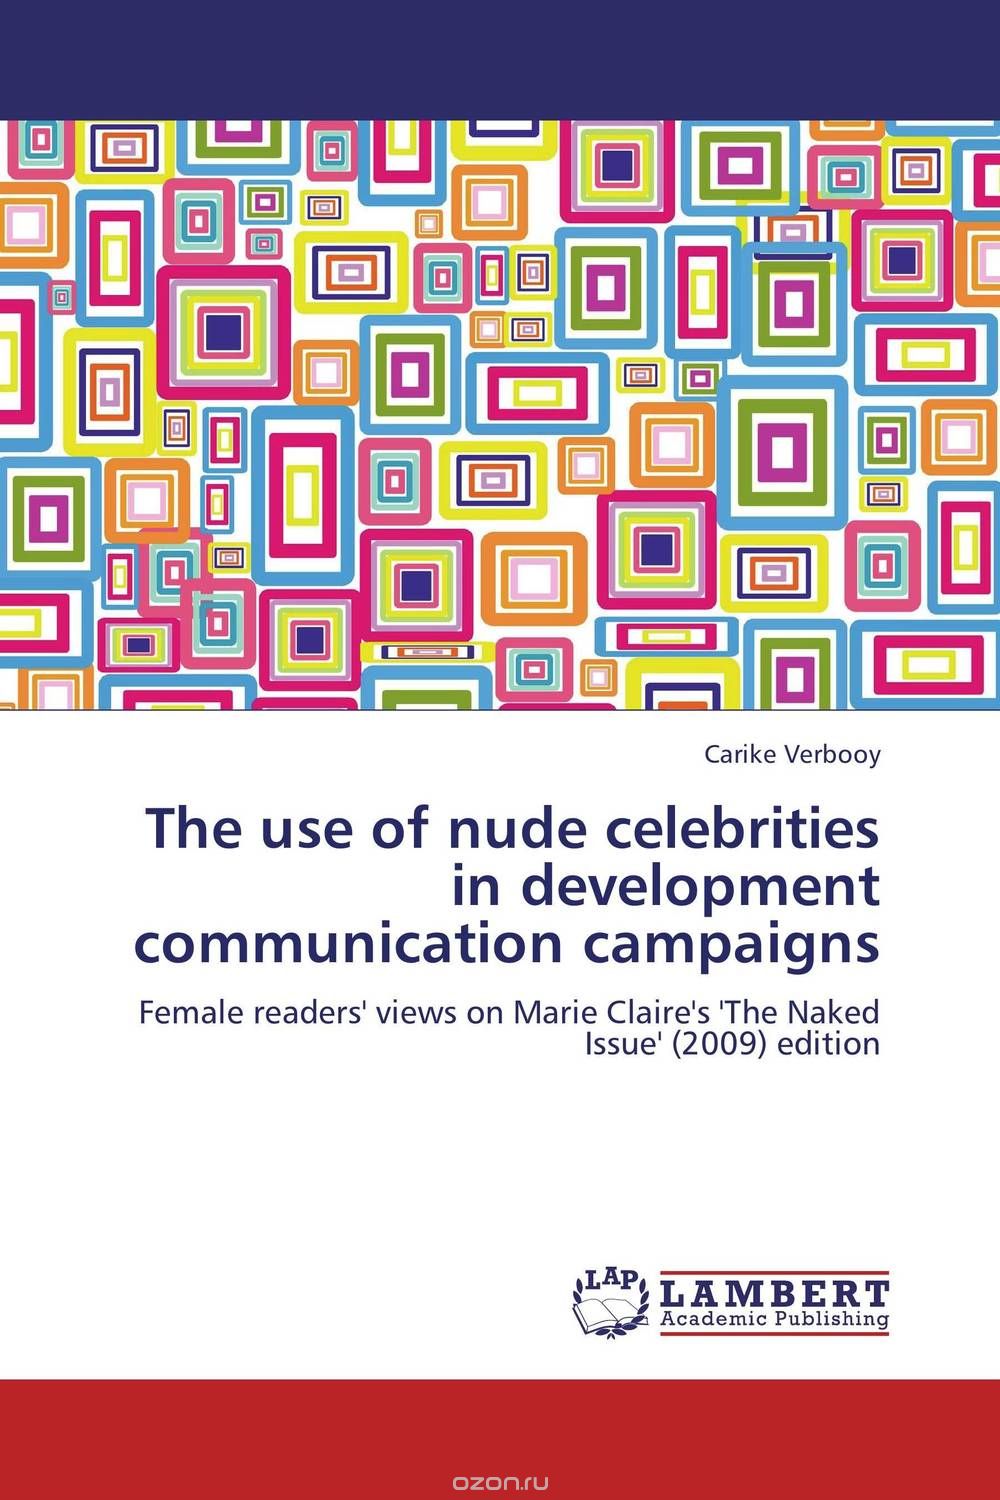 Скачать книгу "The use of nude celebrities in development communication campaigns"